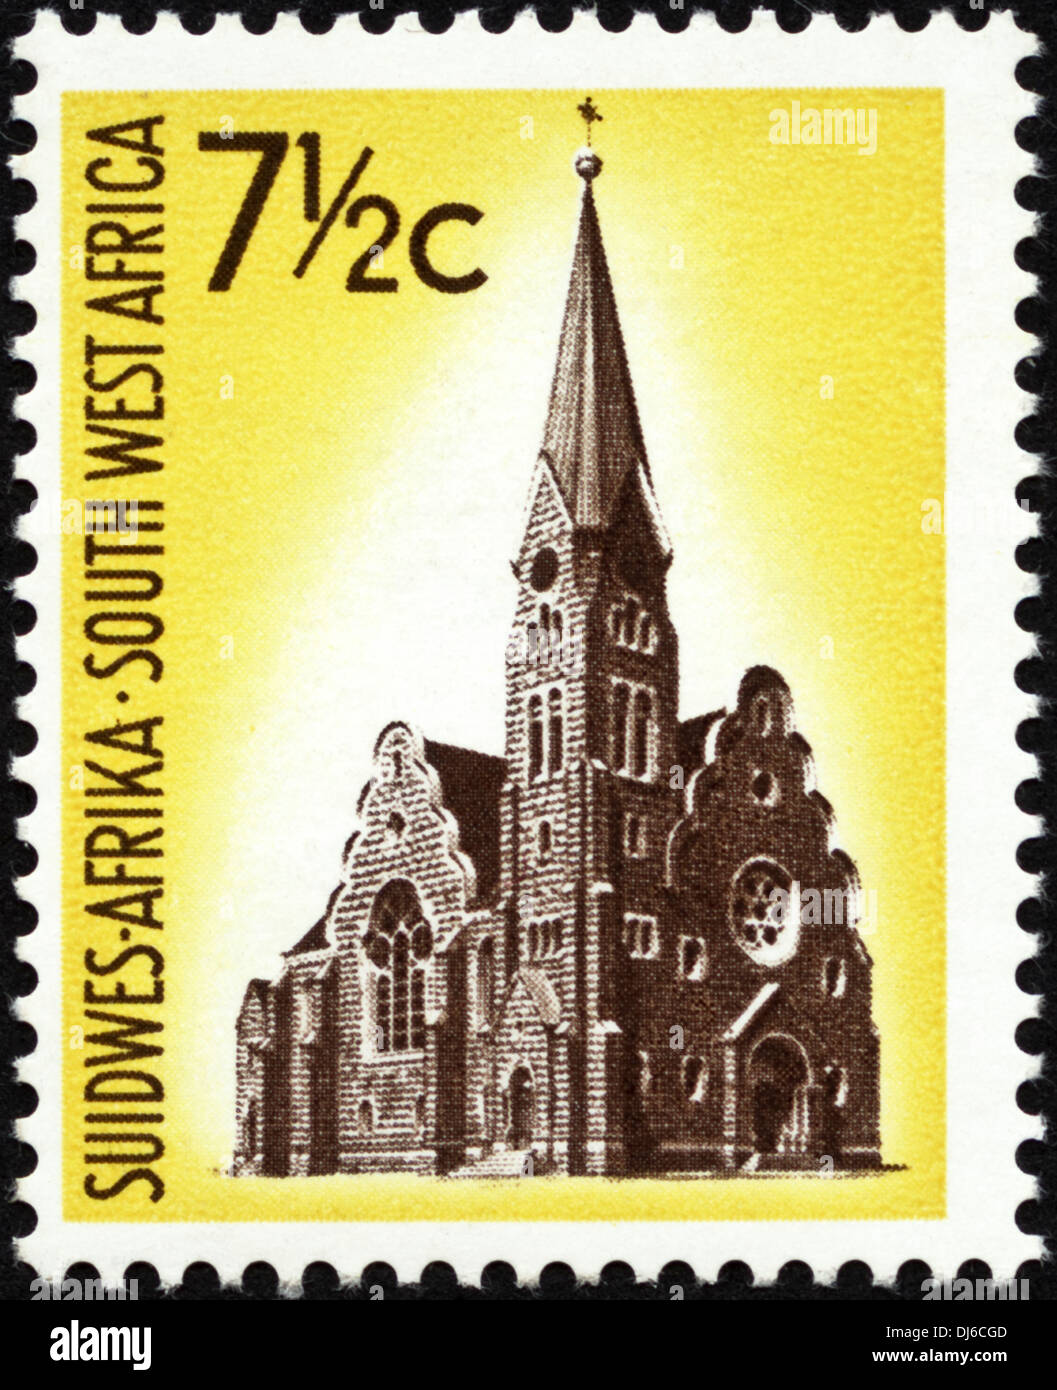 Briefmarke Südwestafrika 7½c mit Kirche mit Turm datiert 1961 Stockfoto